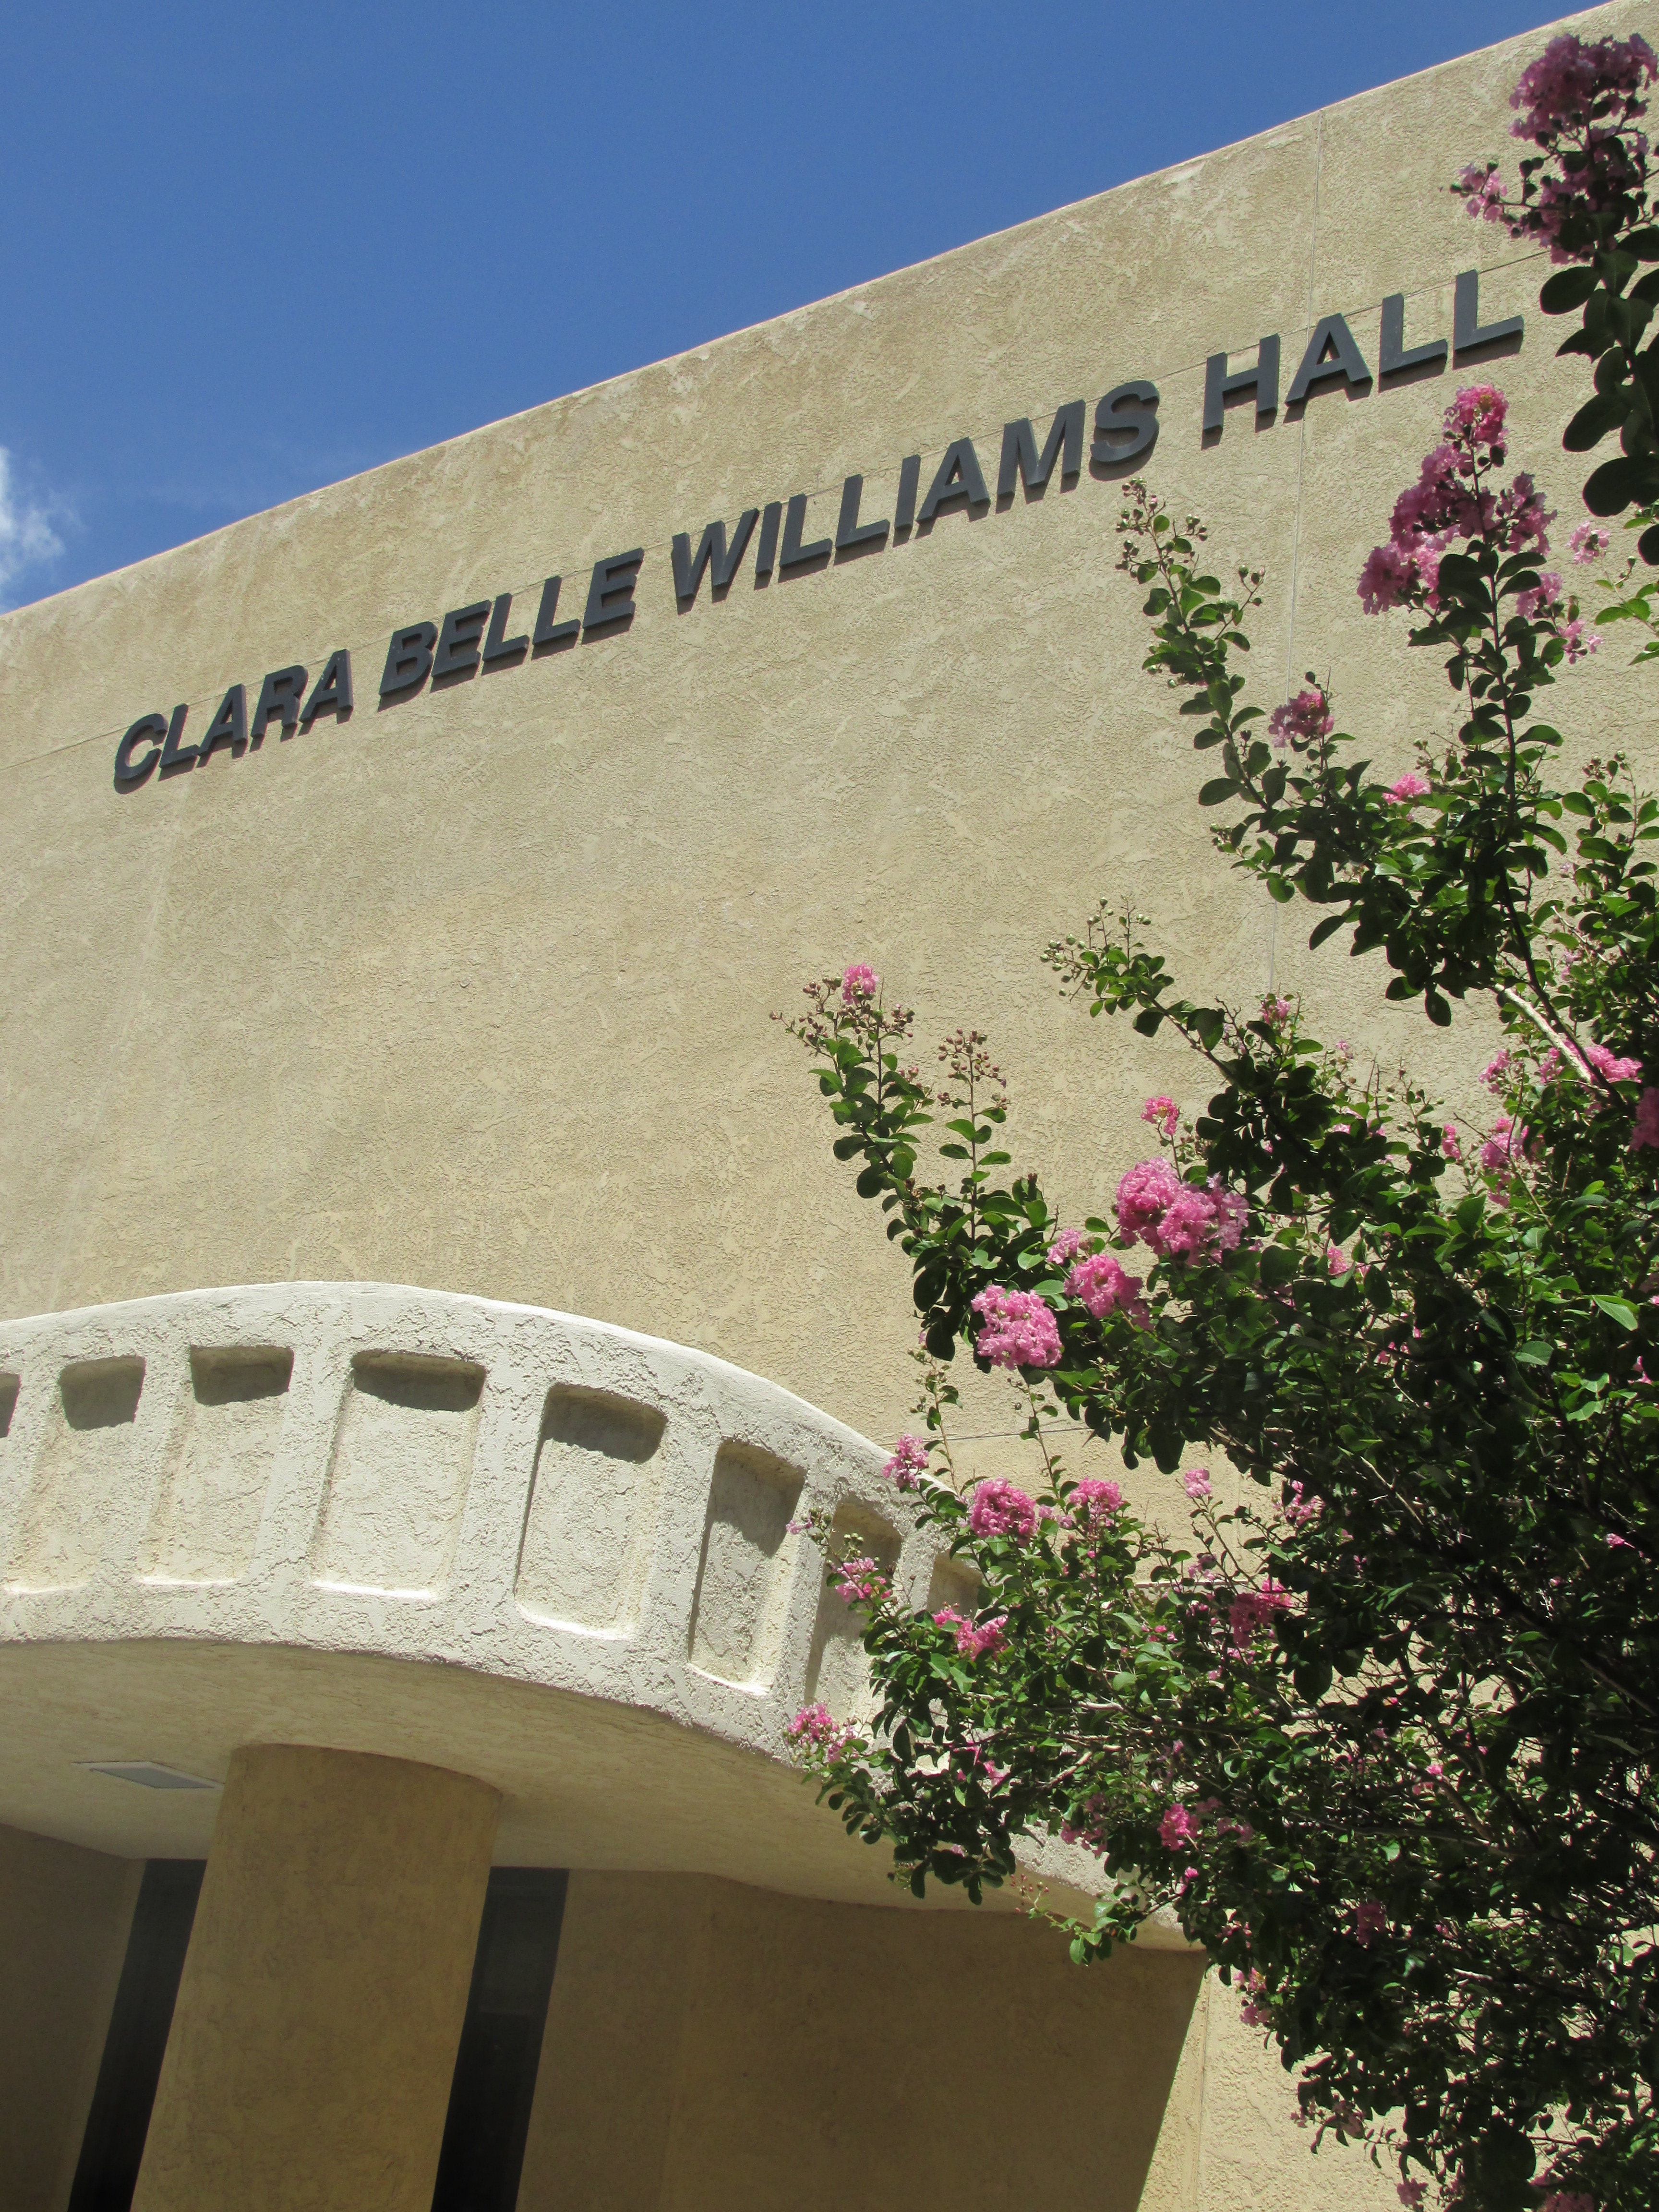 Clara Belle Williams Hall